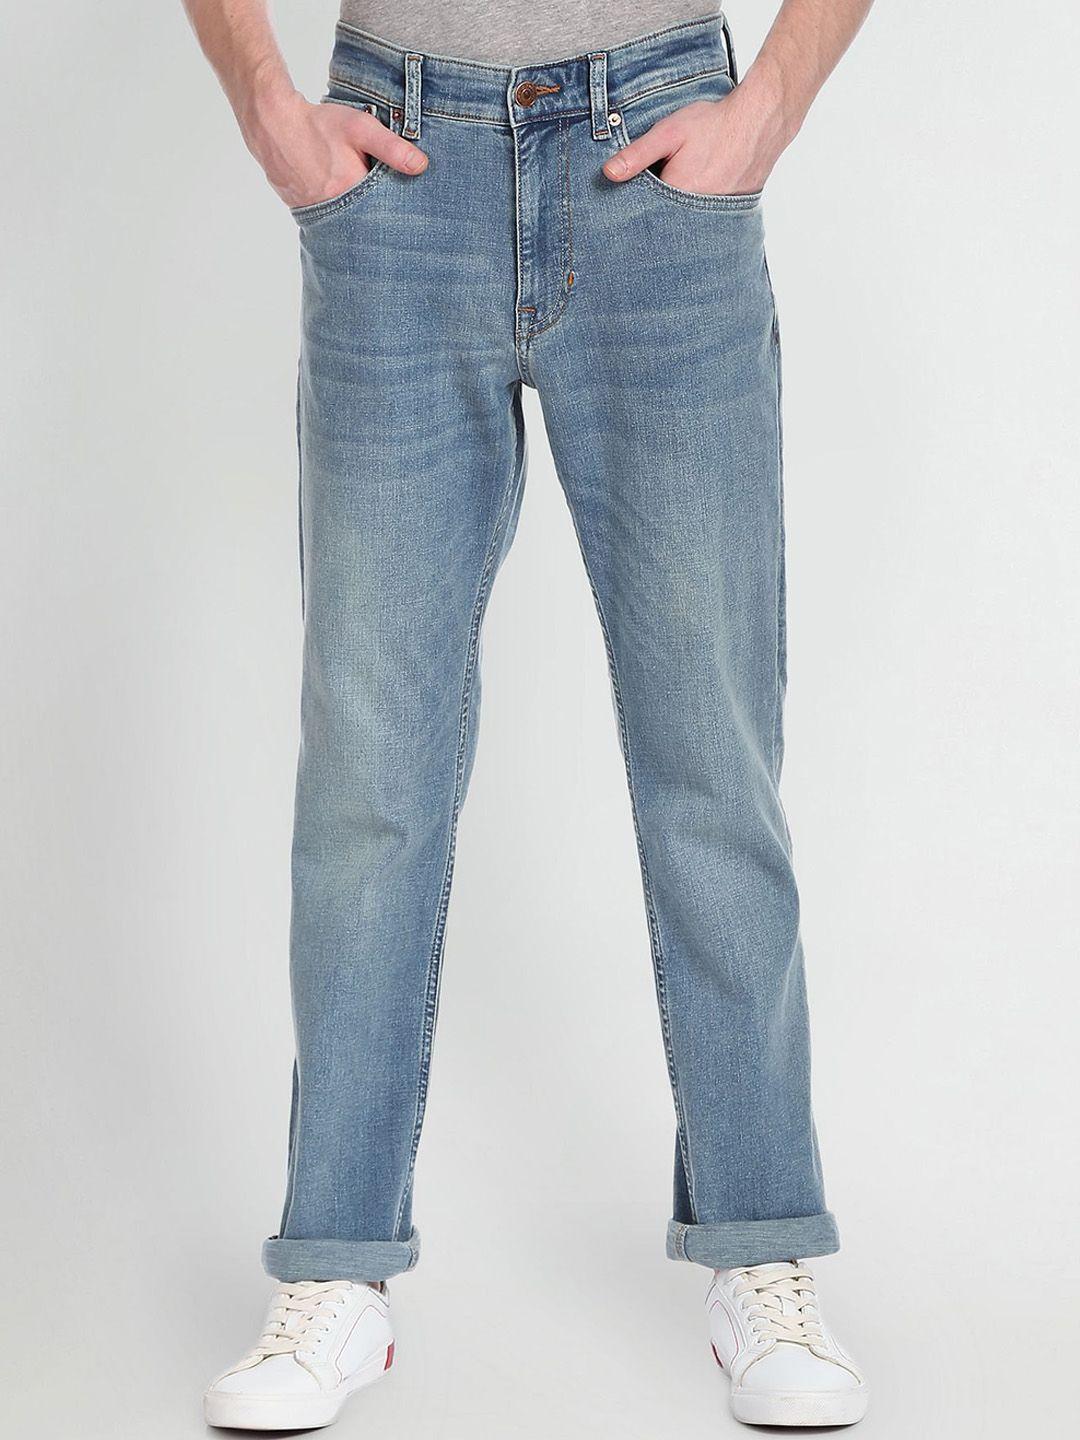 u.s. polo assn. denim co. men straight fit heavy fade jeans